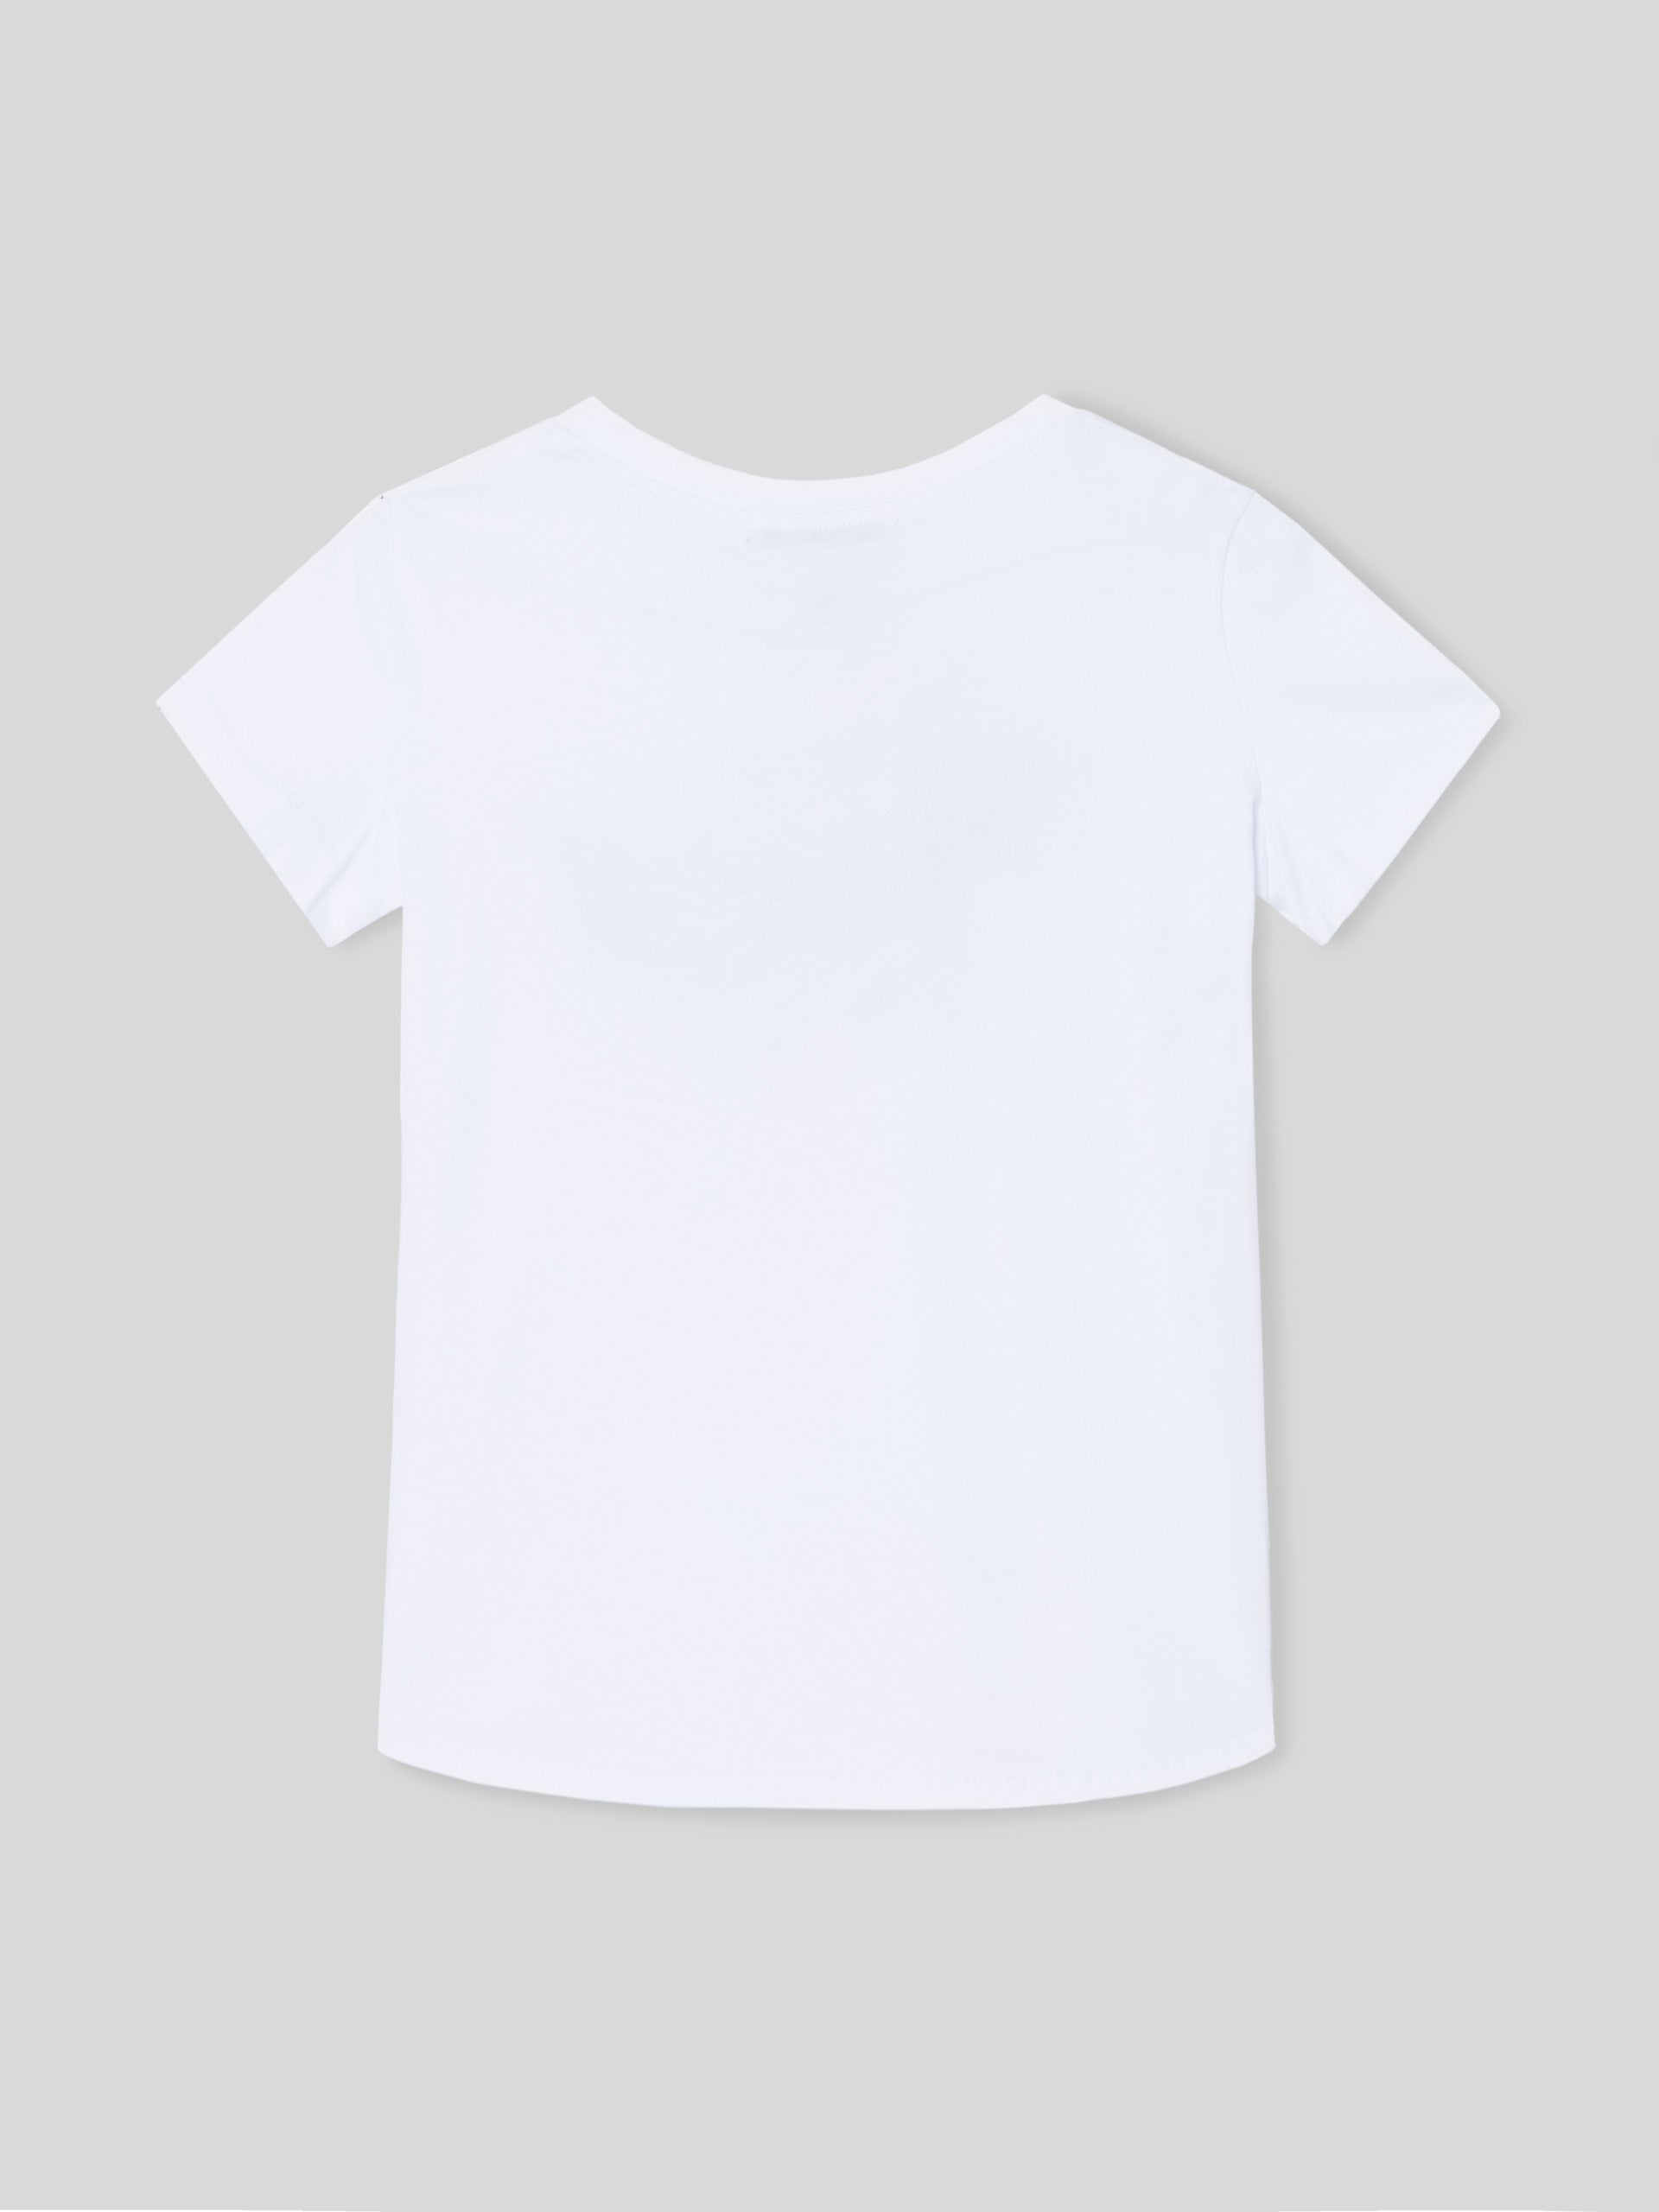 Camiseta woman silbon ikat blanca